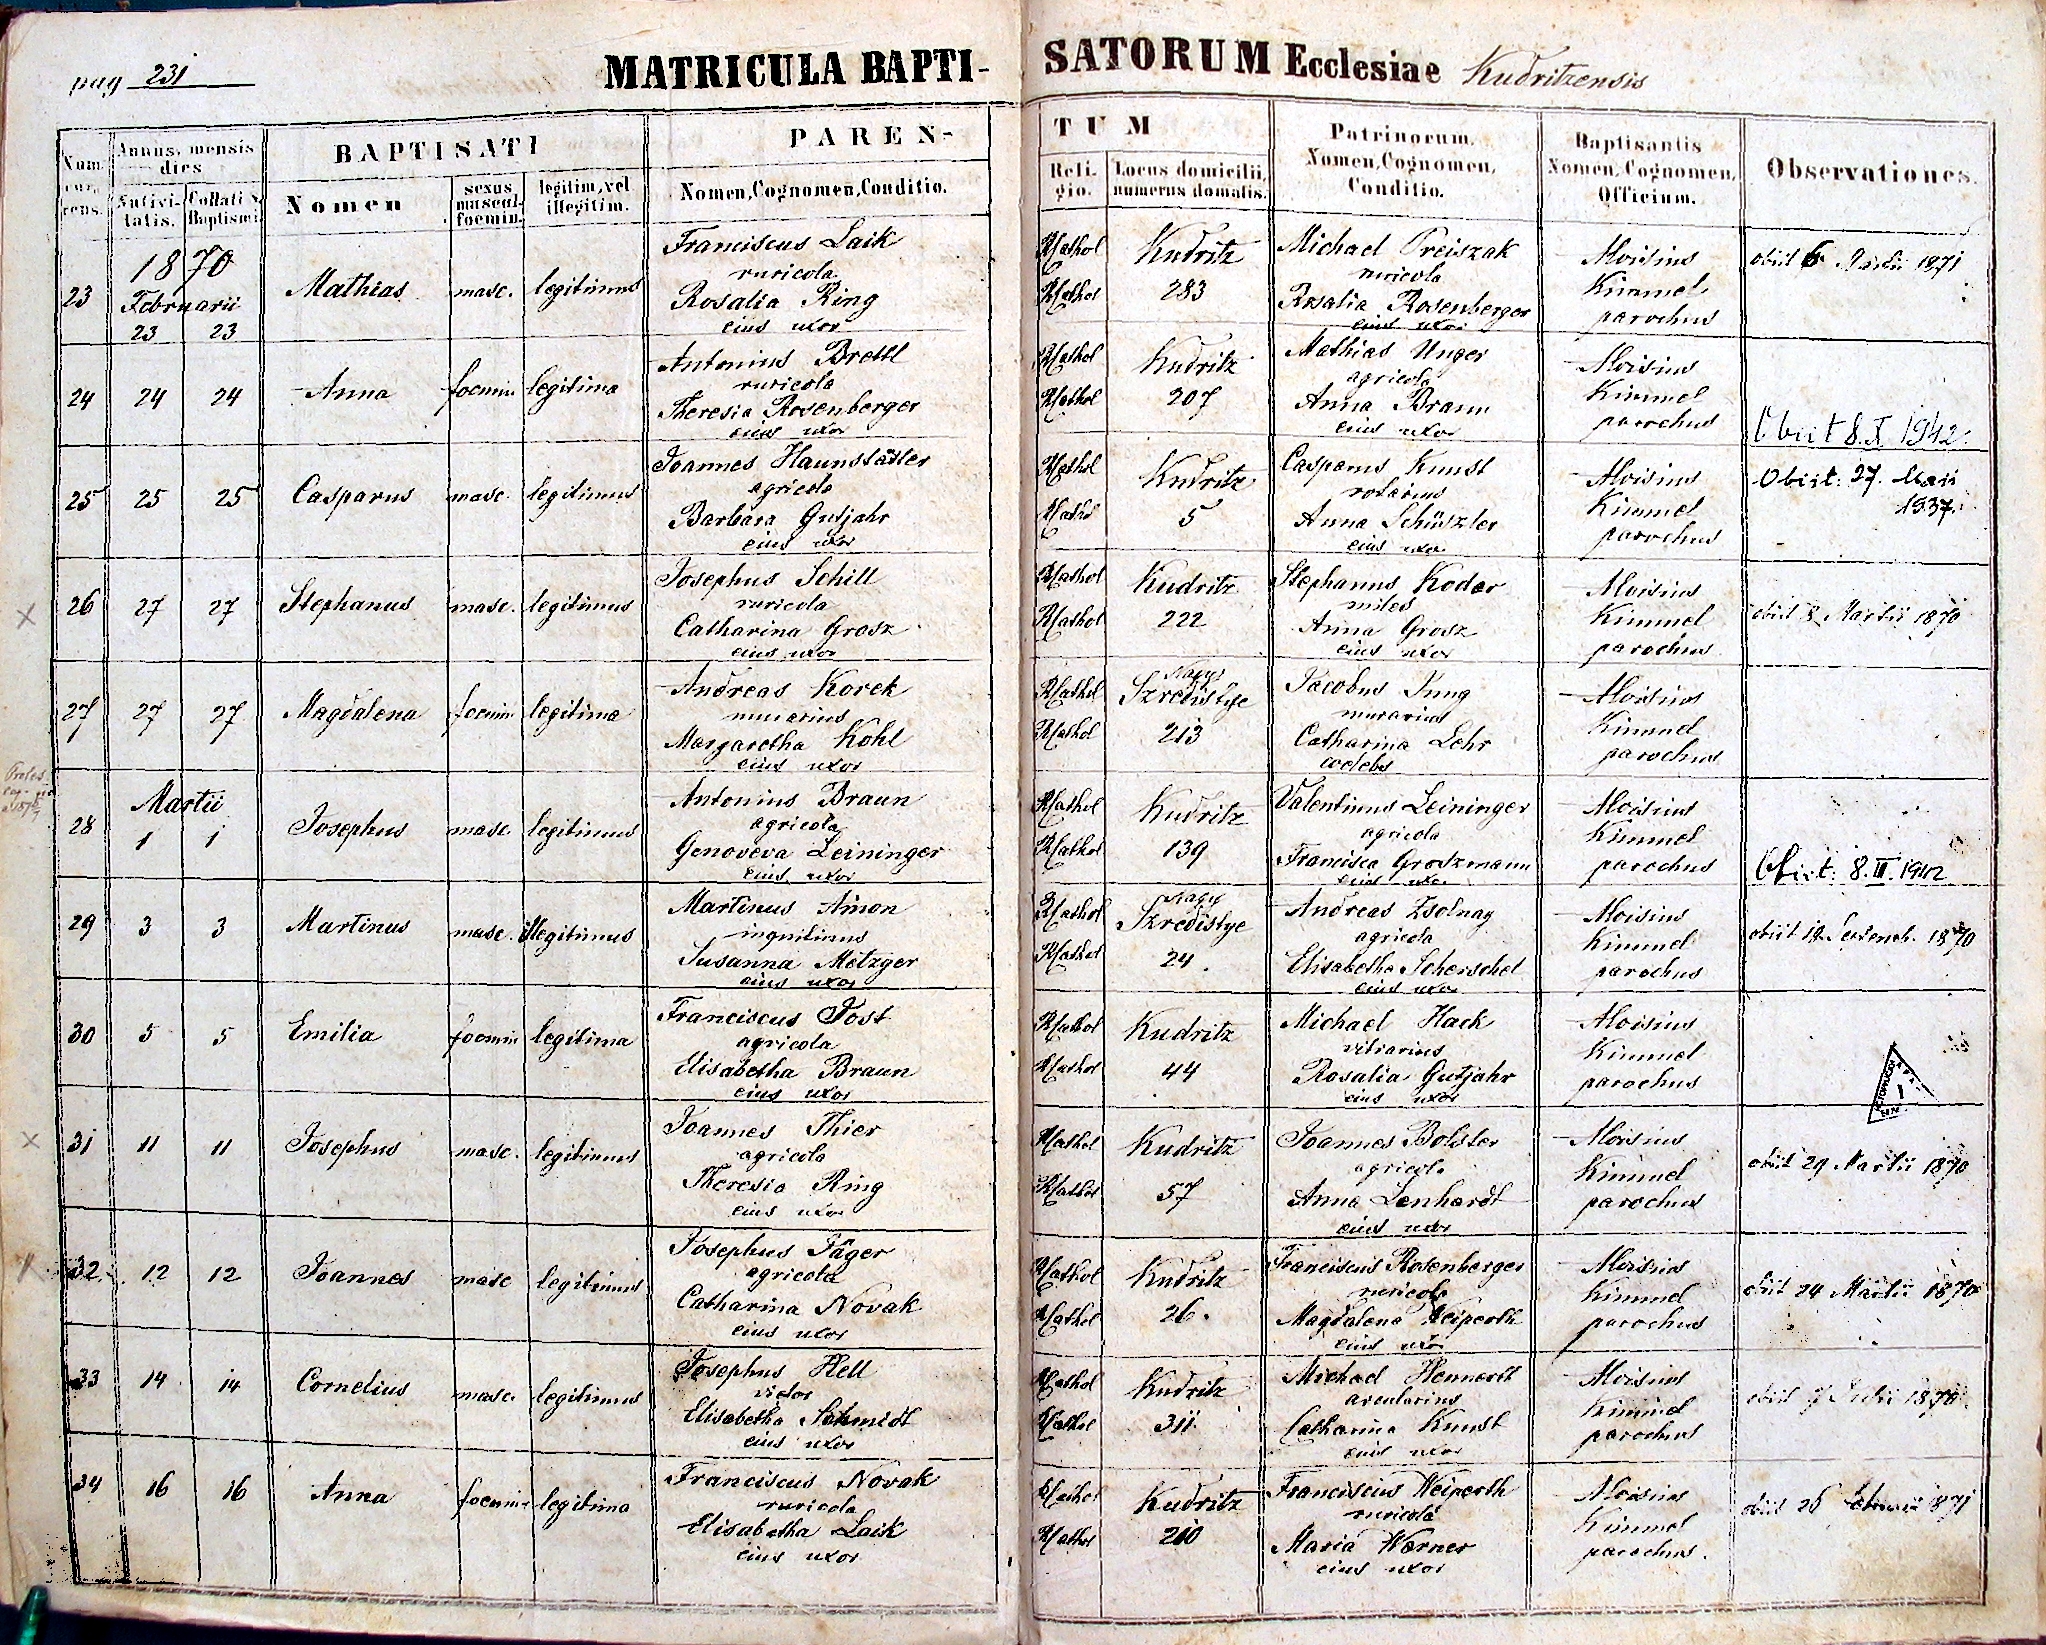 images/church_records/BIRTHS/1852-1870B/231_